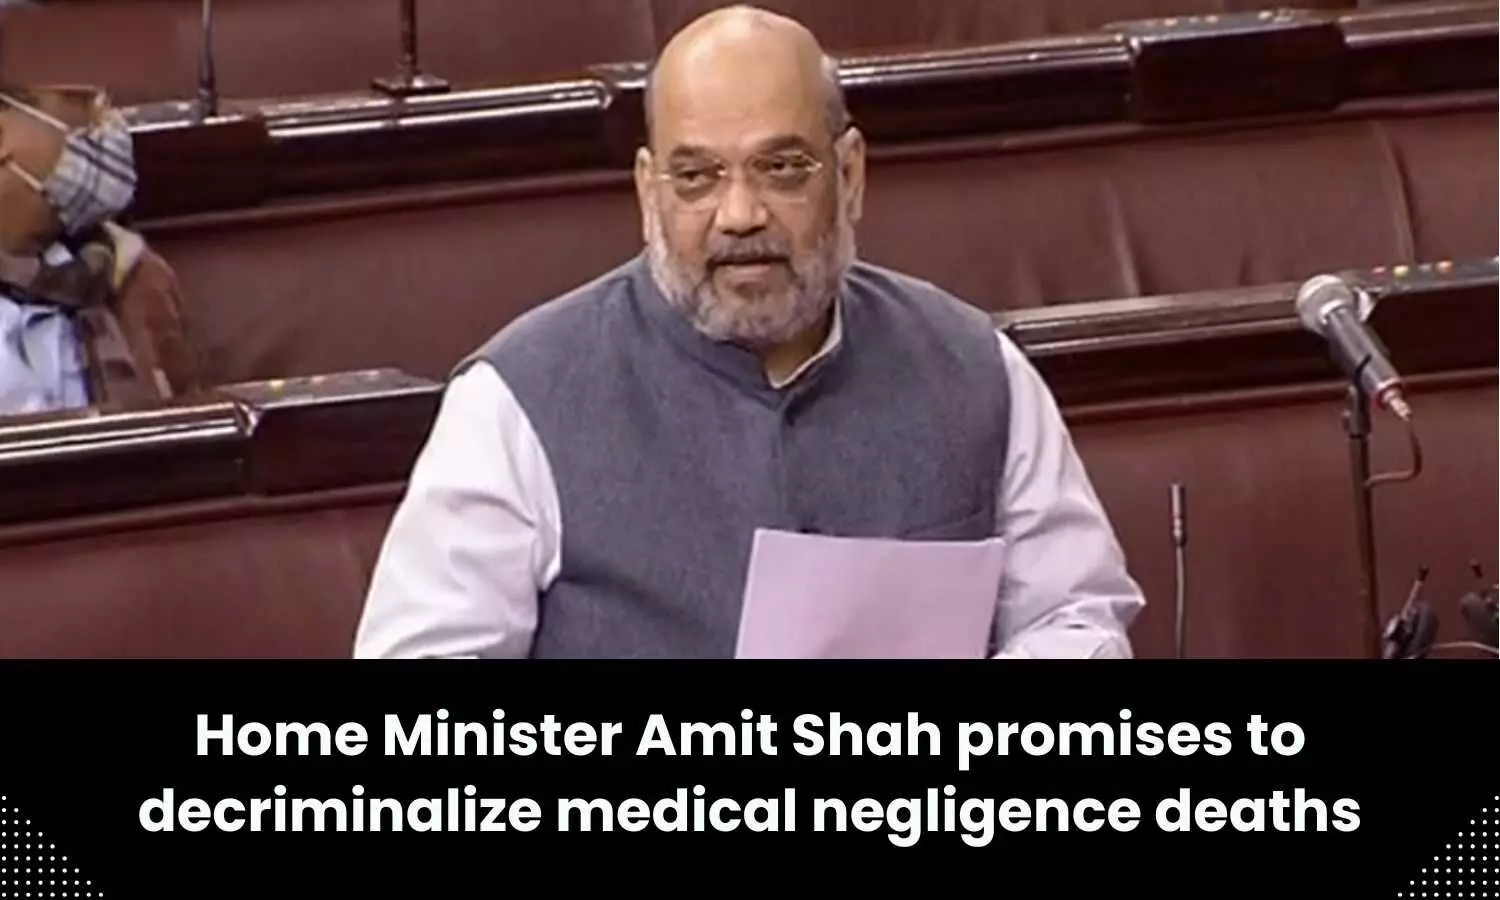 Union Home Minister promises to decriminalize medical negligence deaths